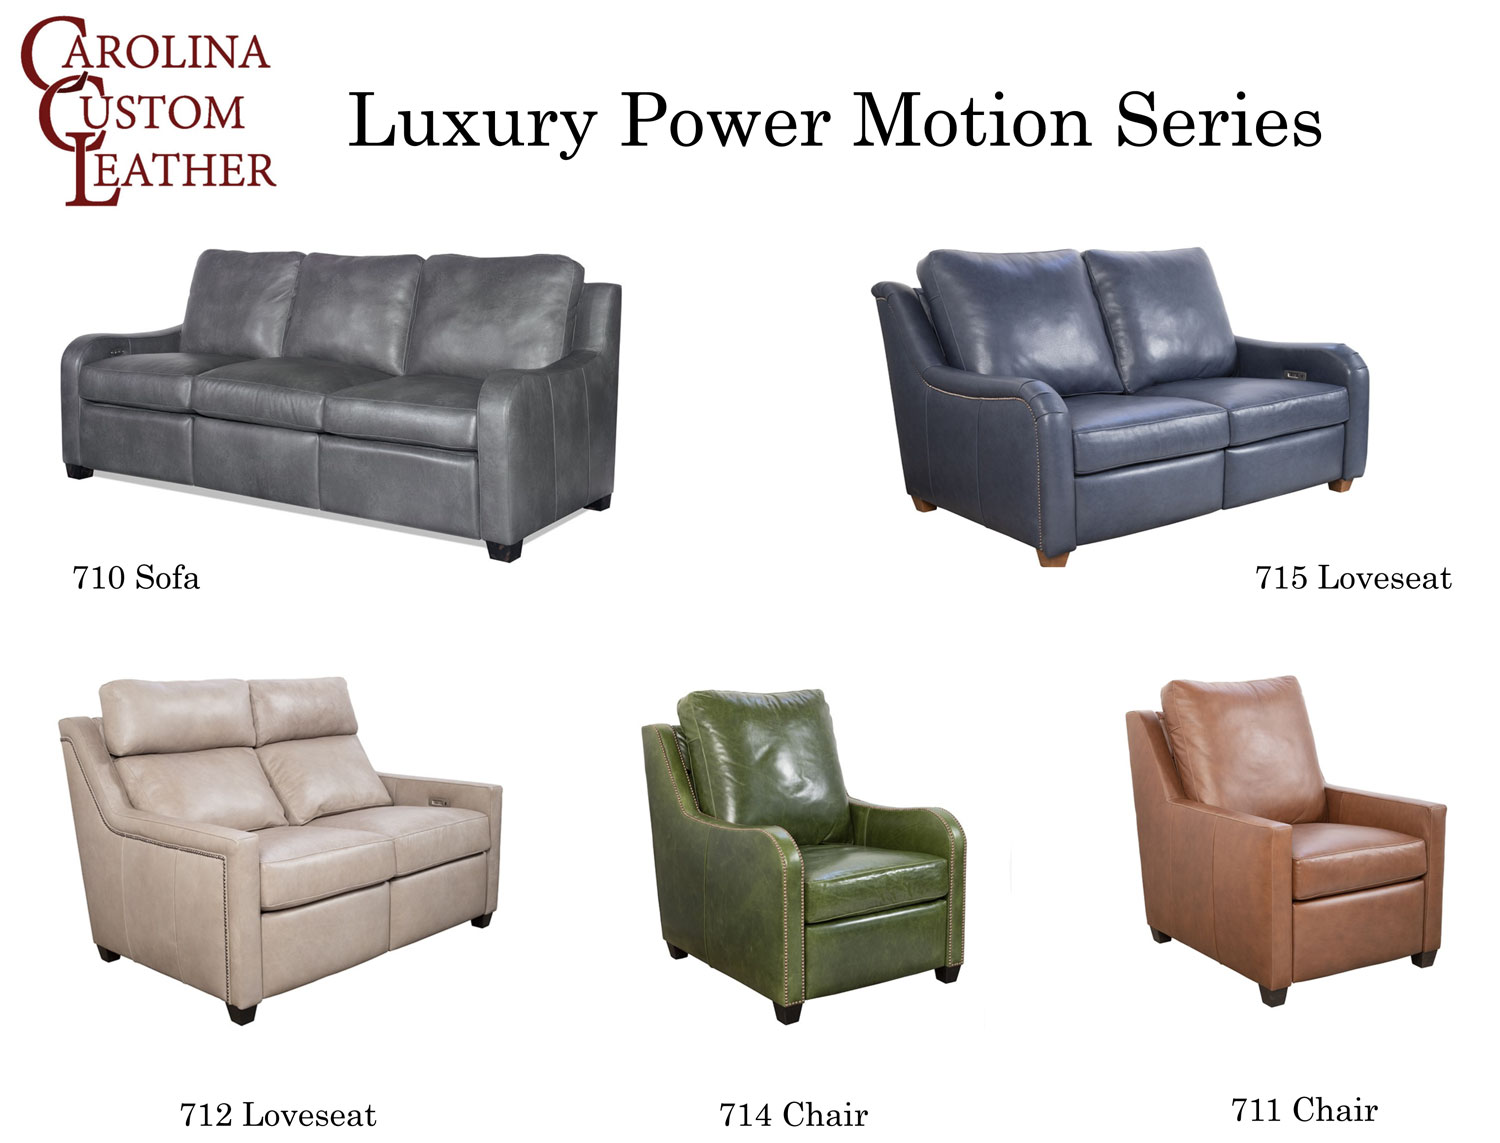   Carolina Custom Leather Luxury Power Motion Series Program